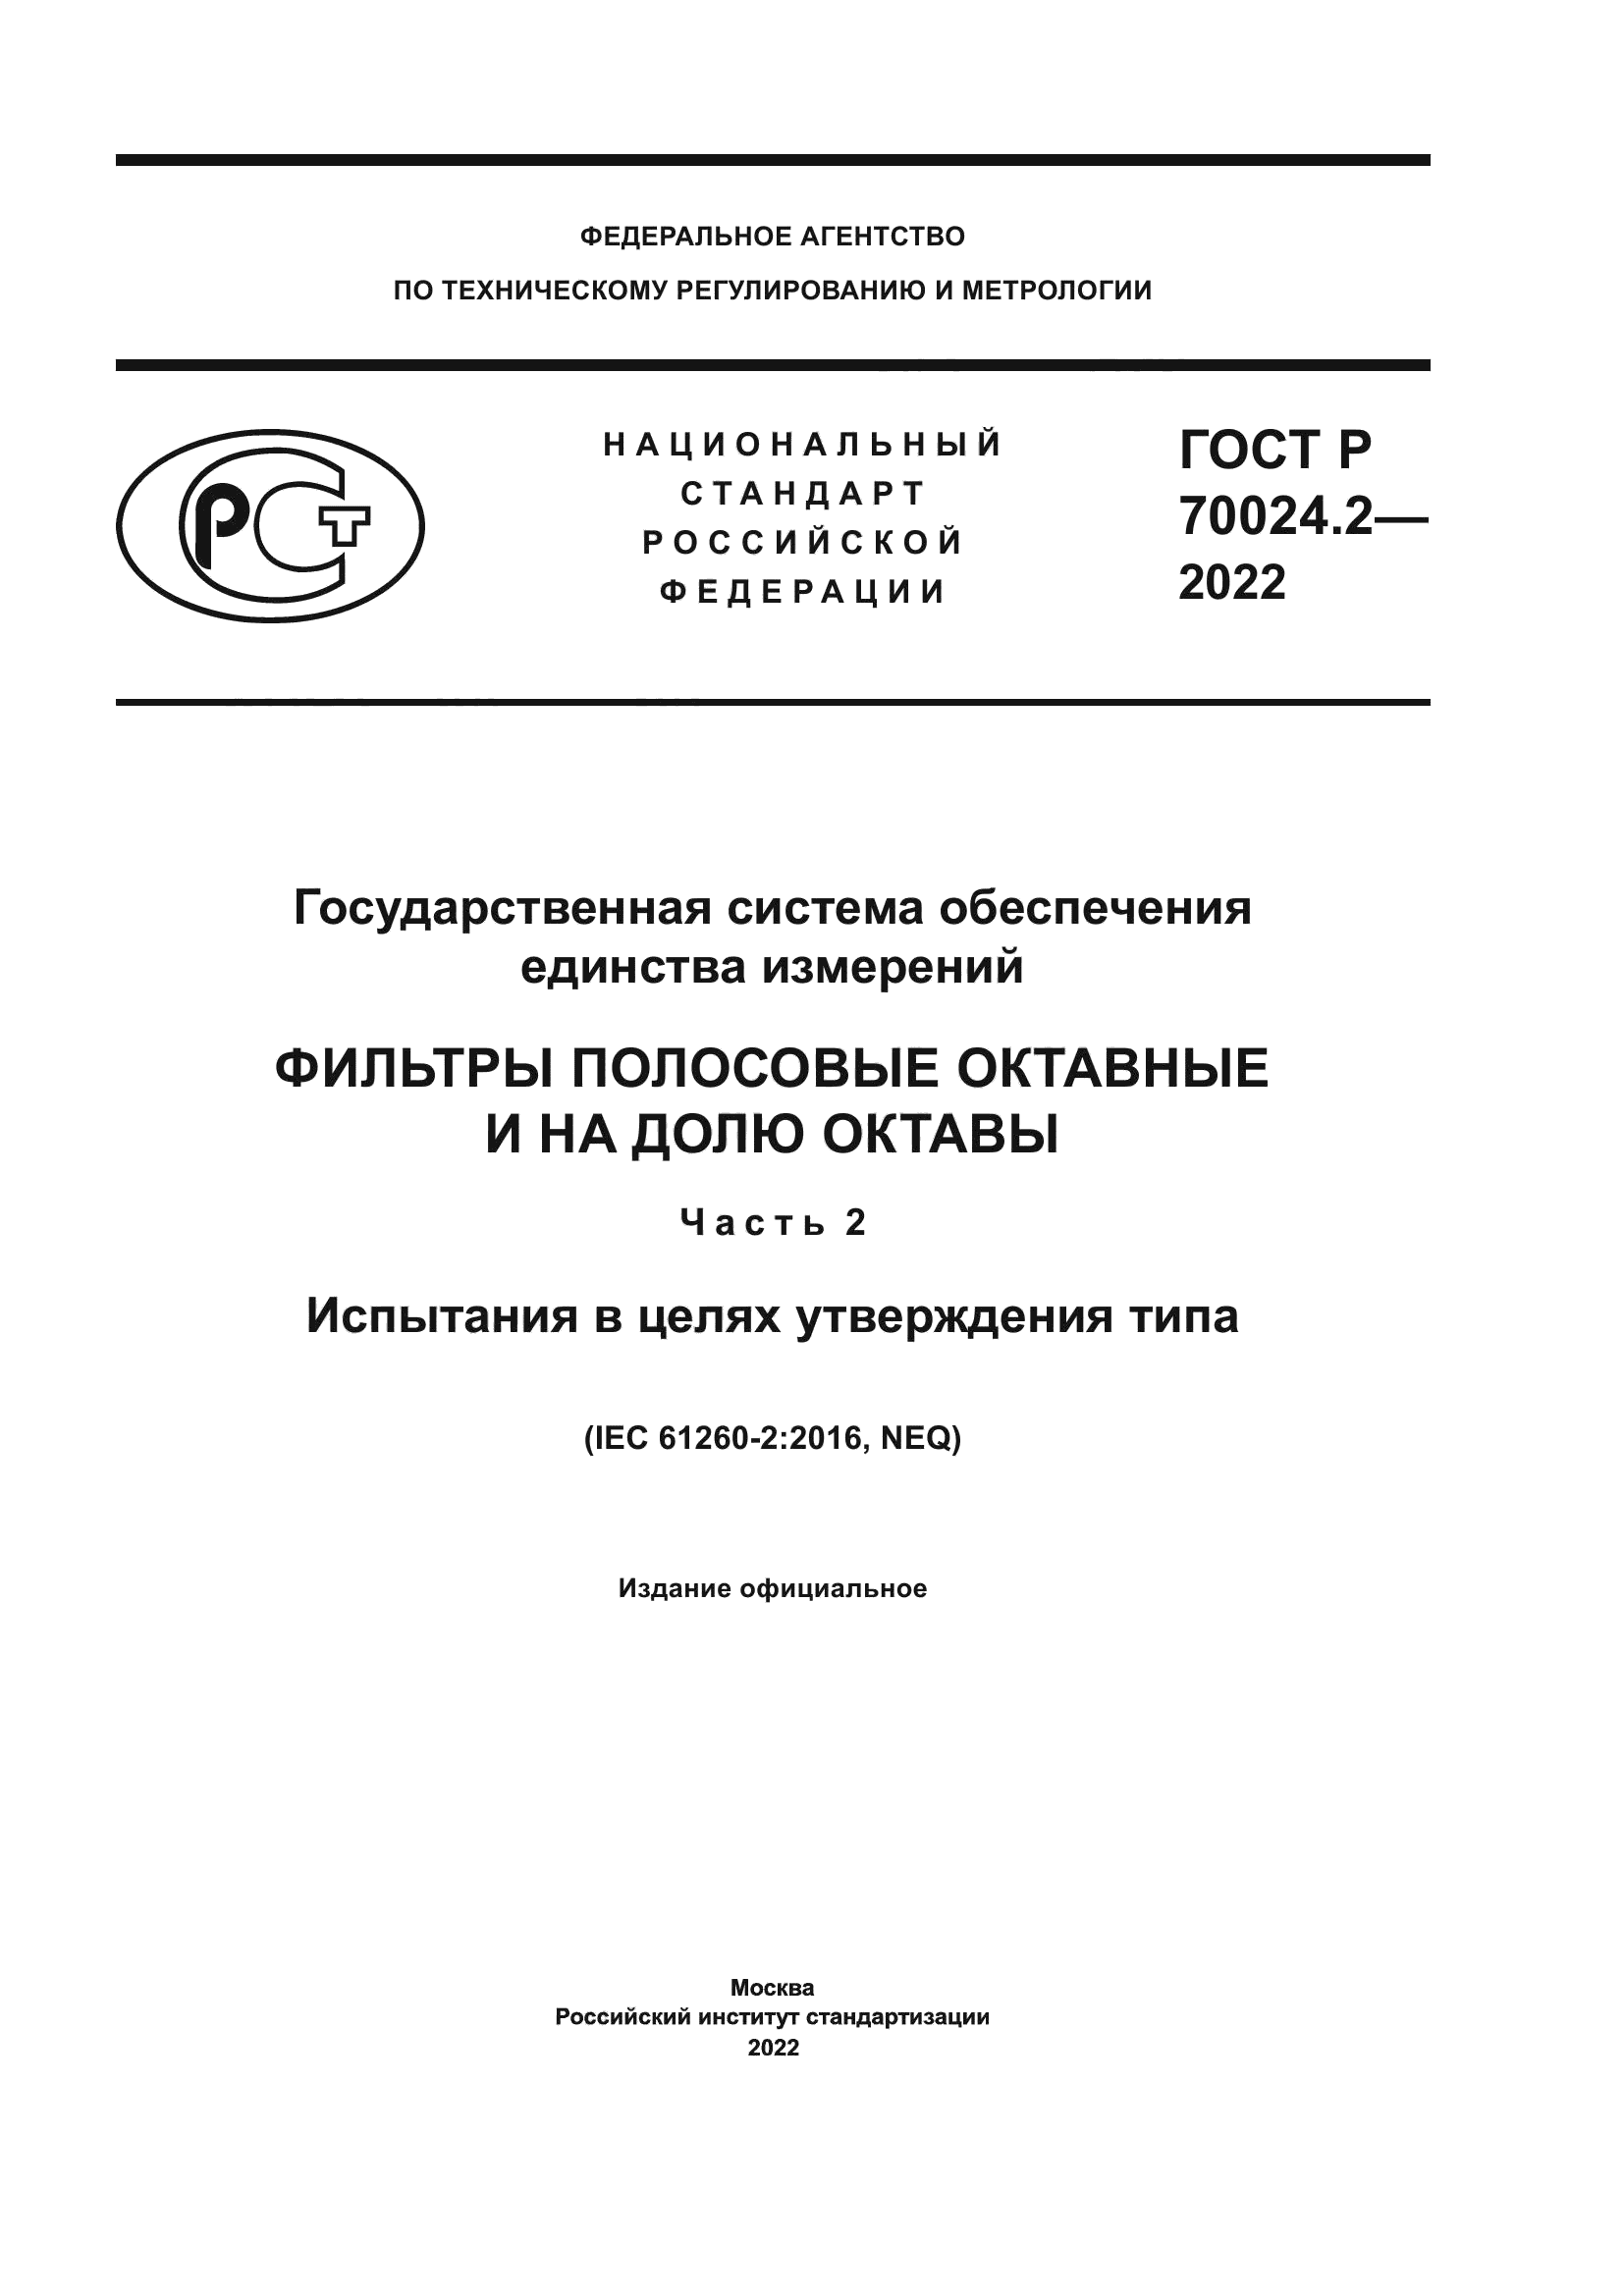 ГОСТ Р 70024.2-2022